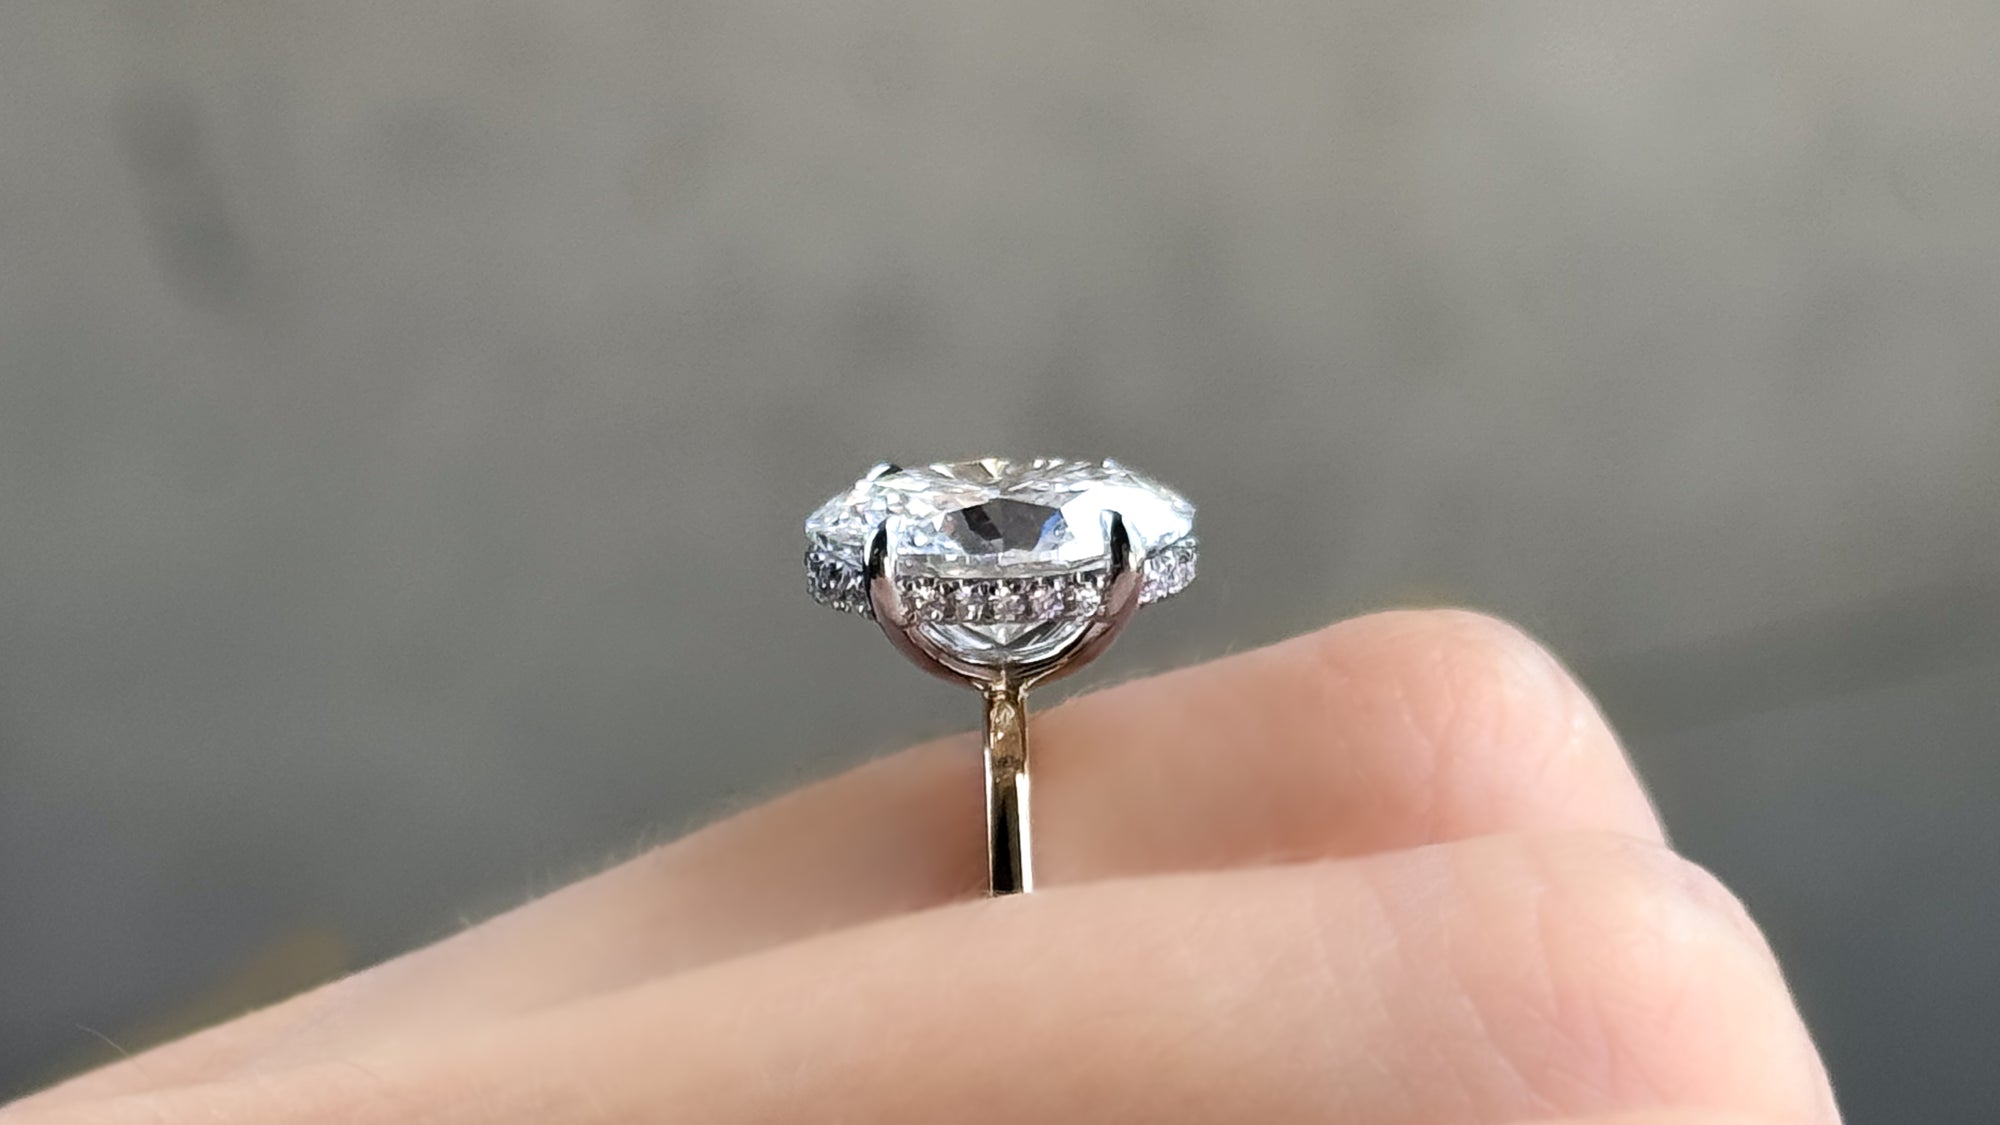 GOODSTONE hidden halo engagement ring